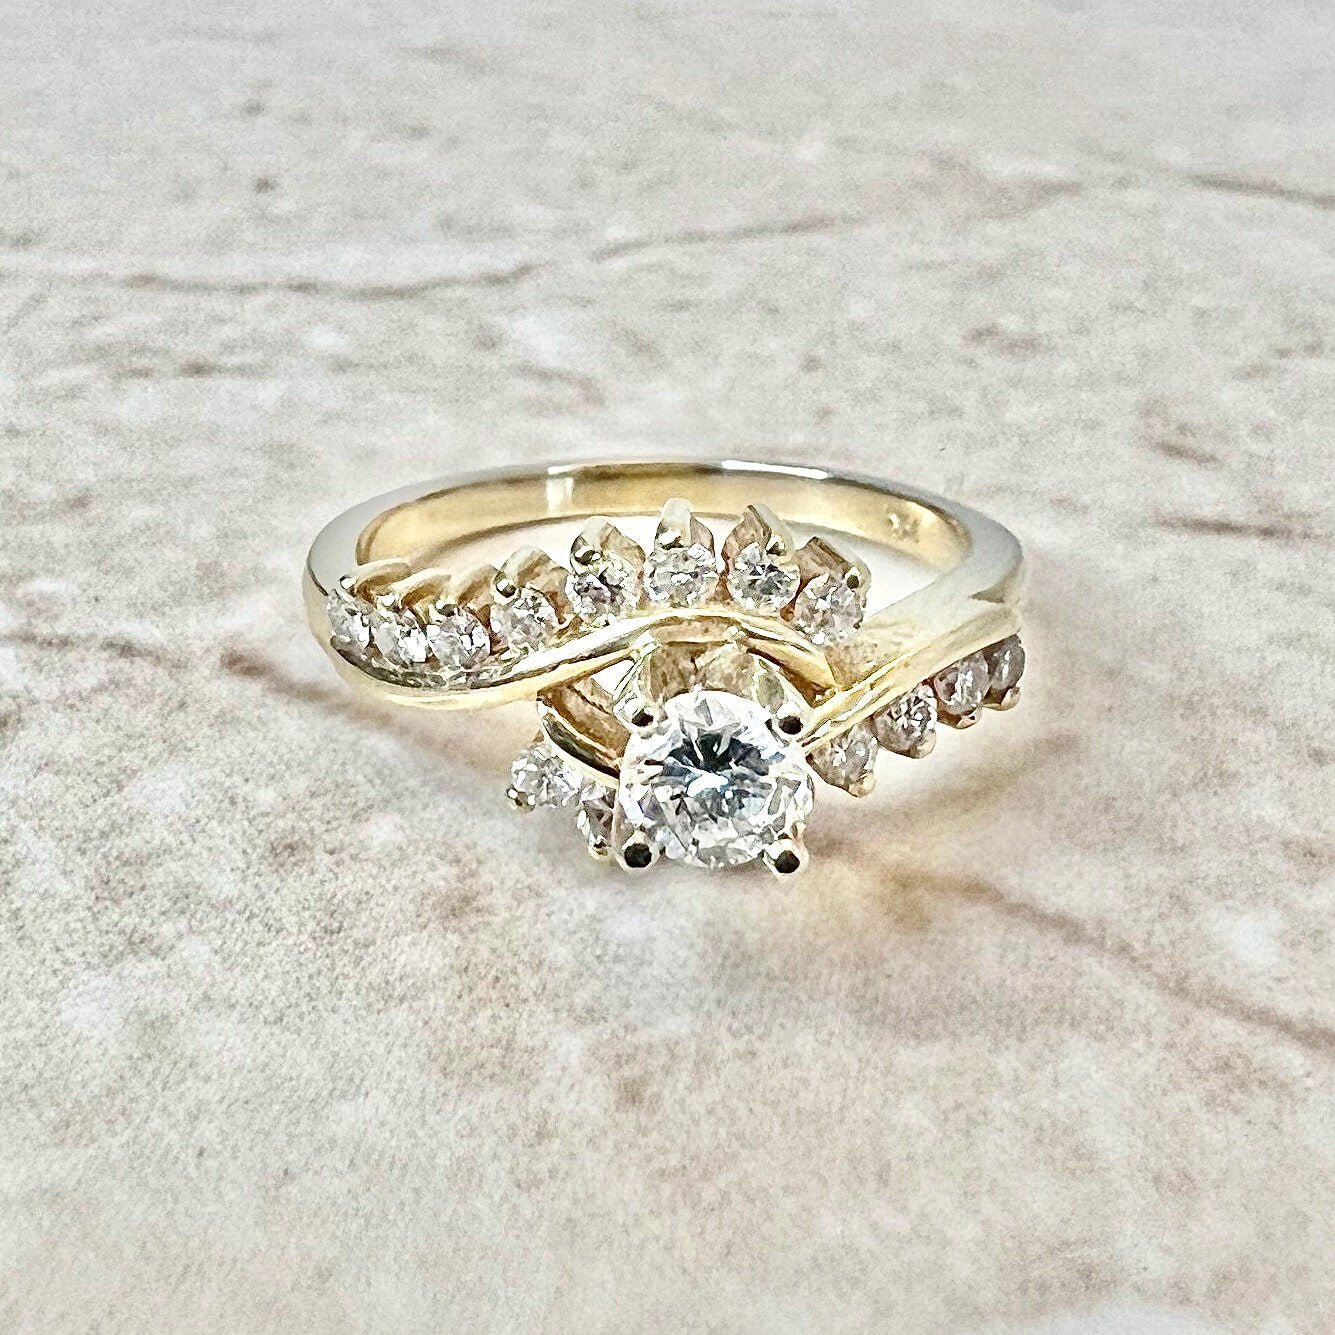 14K Vintage Diamond Engagement Ring - Yellow Gold Engagement Ring - Round Diamond Wedding Ring - Wedding Jewelry - Anniversary Ring